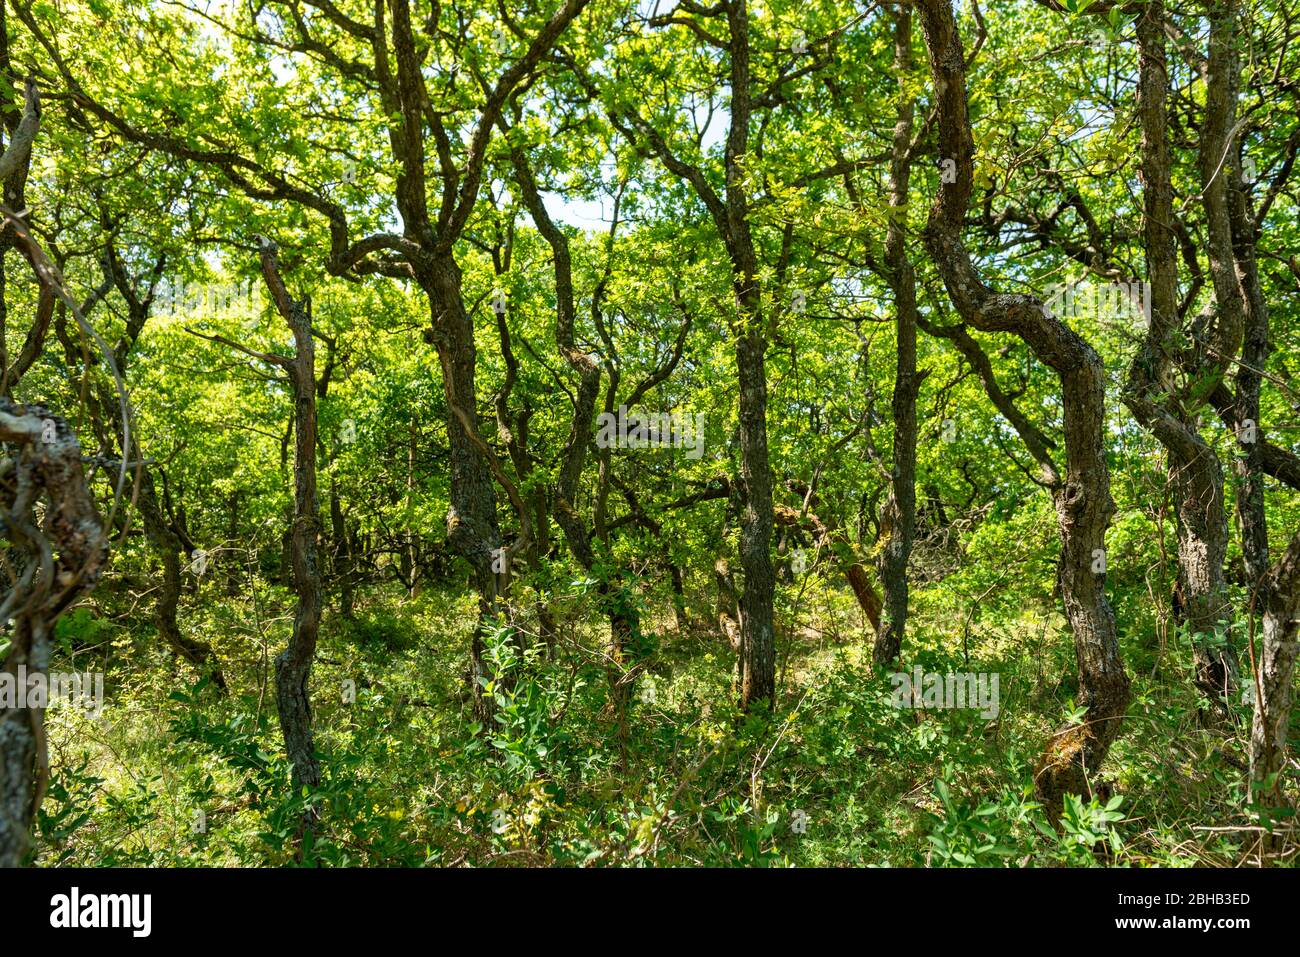 Denmark, Jutland, Ringkobing Fjord, the sent oak forest is located in the Kærgård Plantation in the Vesterhavet Nature Park. Stock Photo